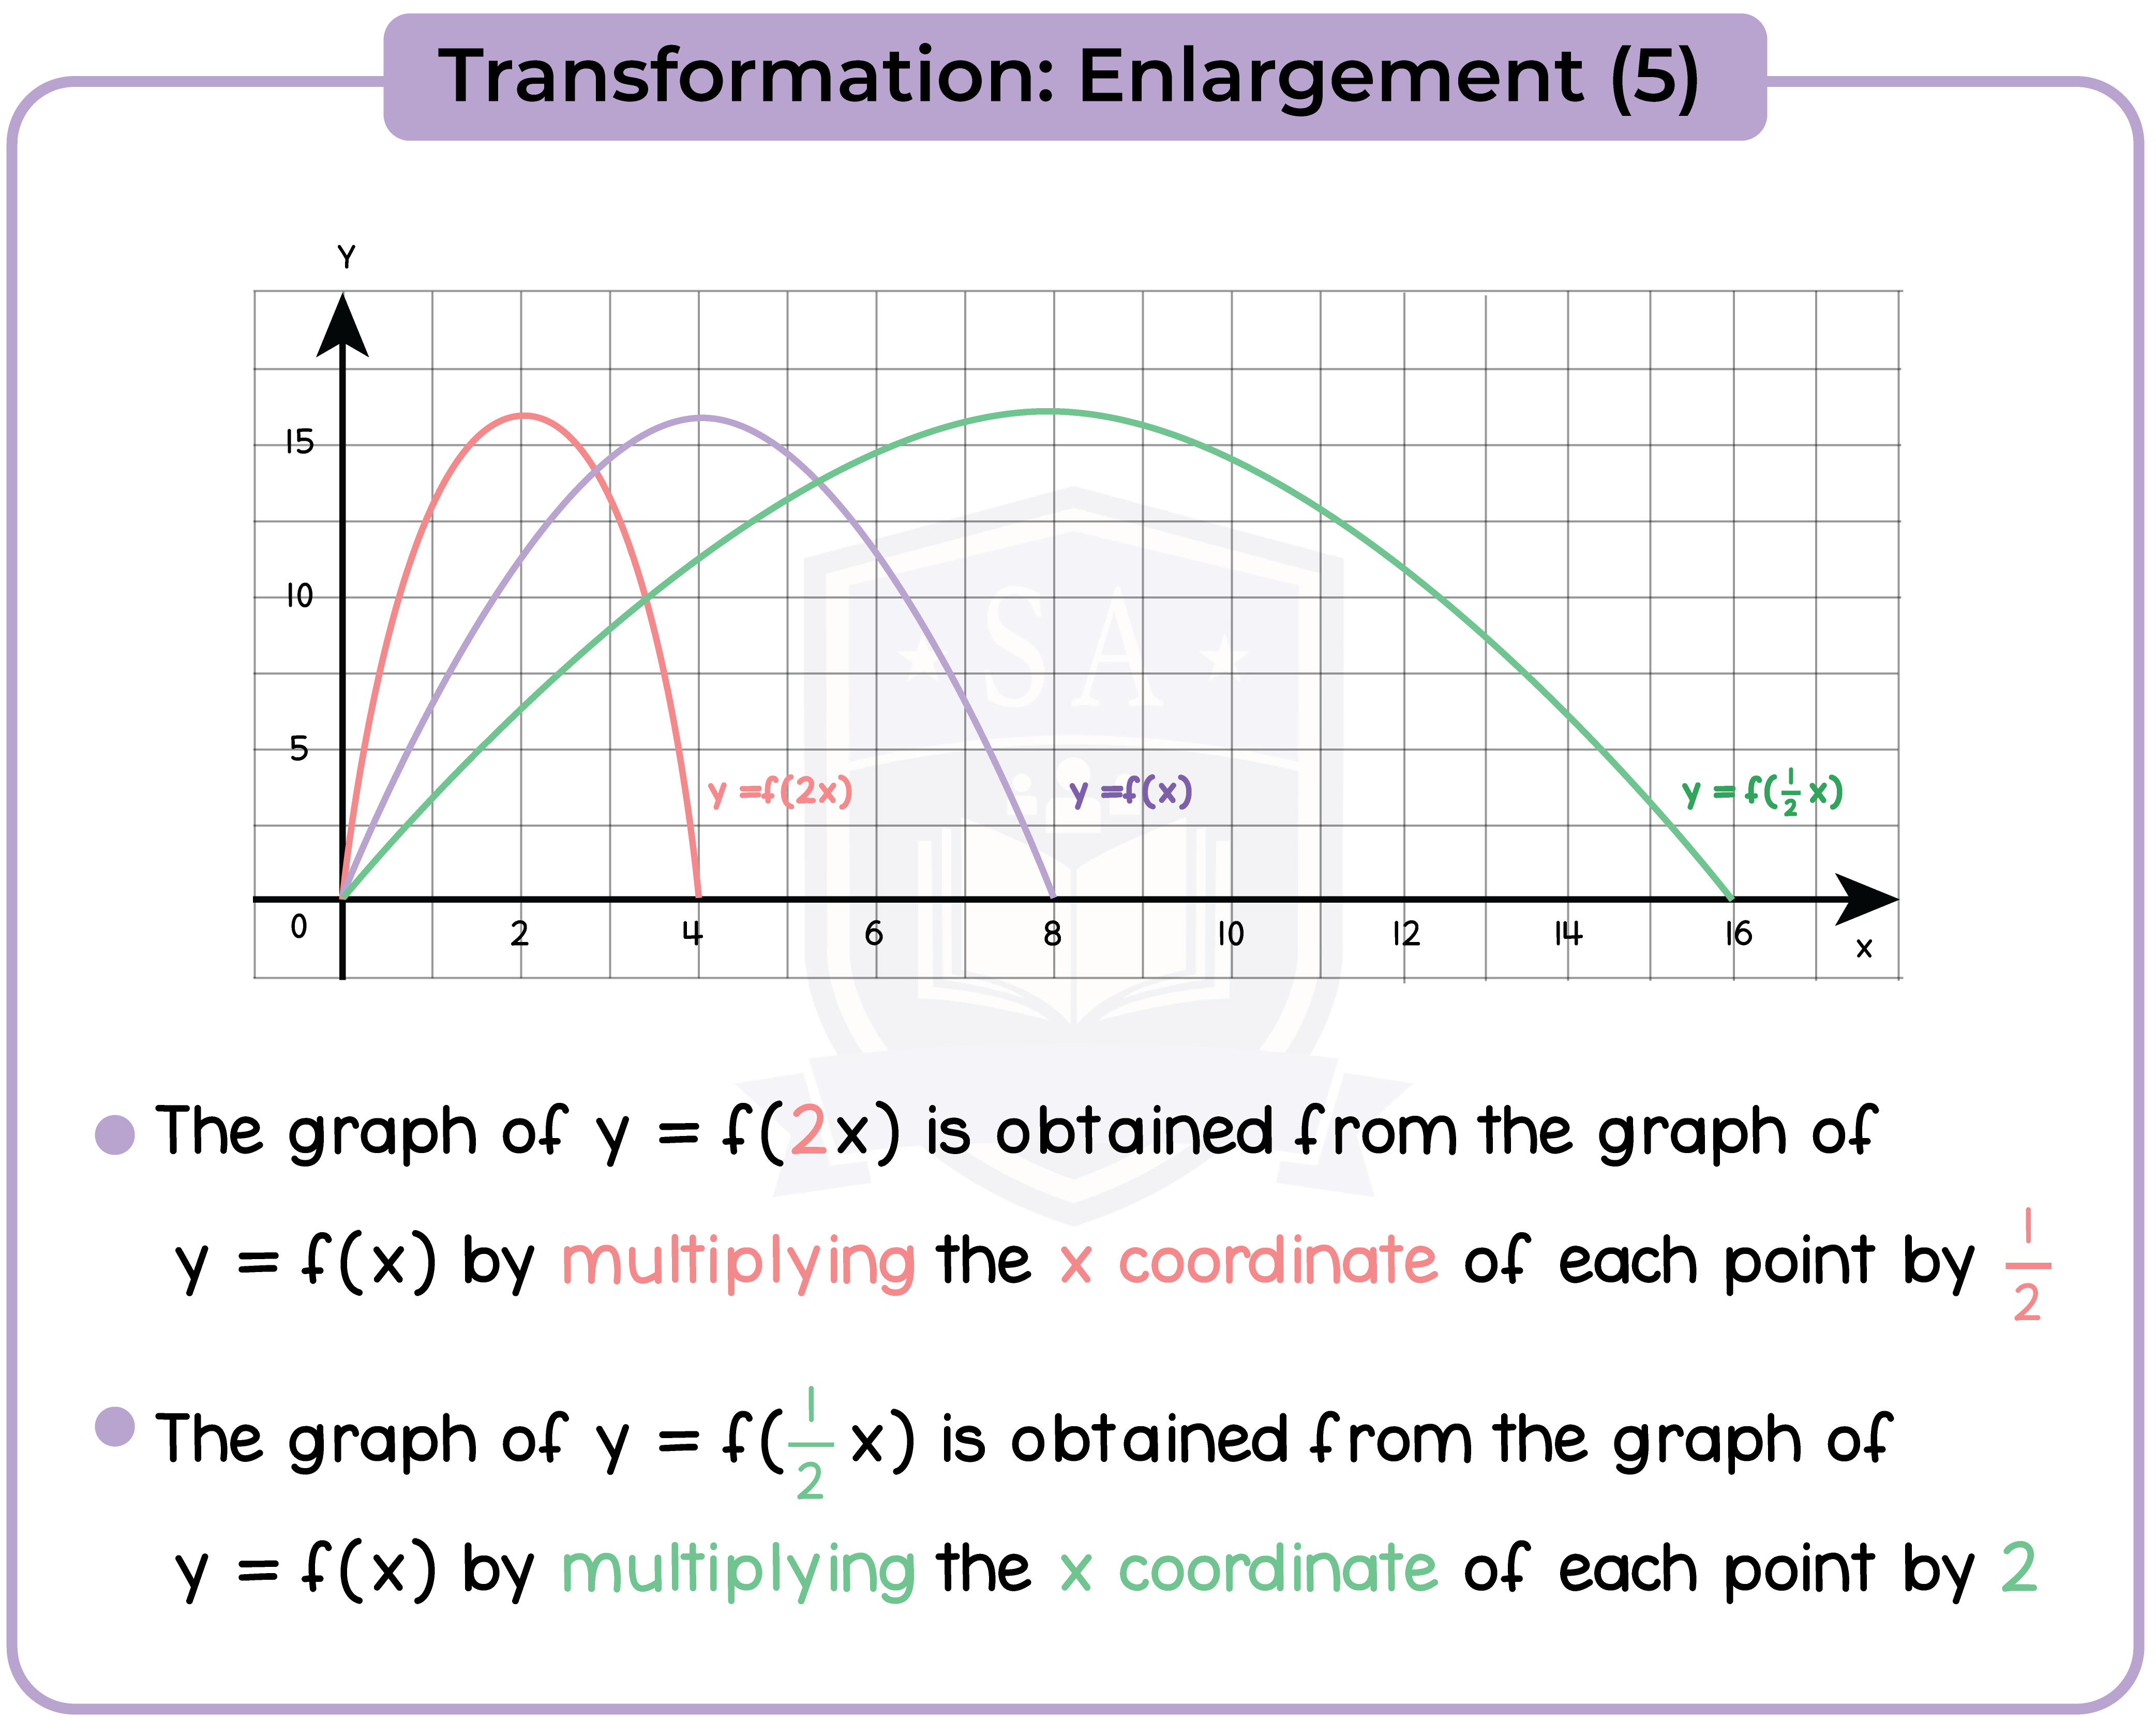 edexcel_igcse_mathematics a_topic 23_graphs_015_Transformation: Enlargement (5)